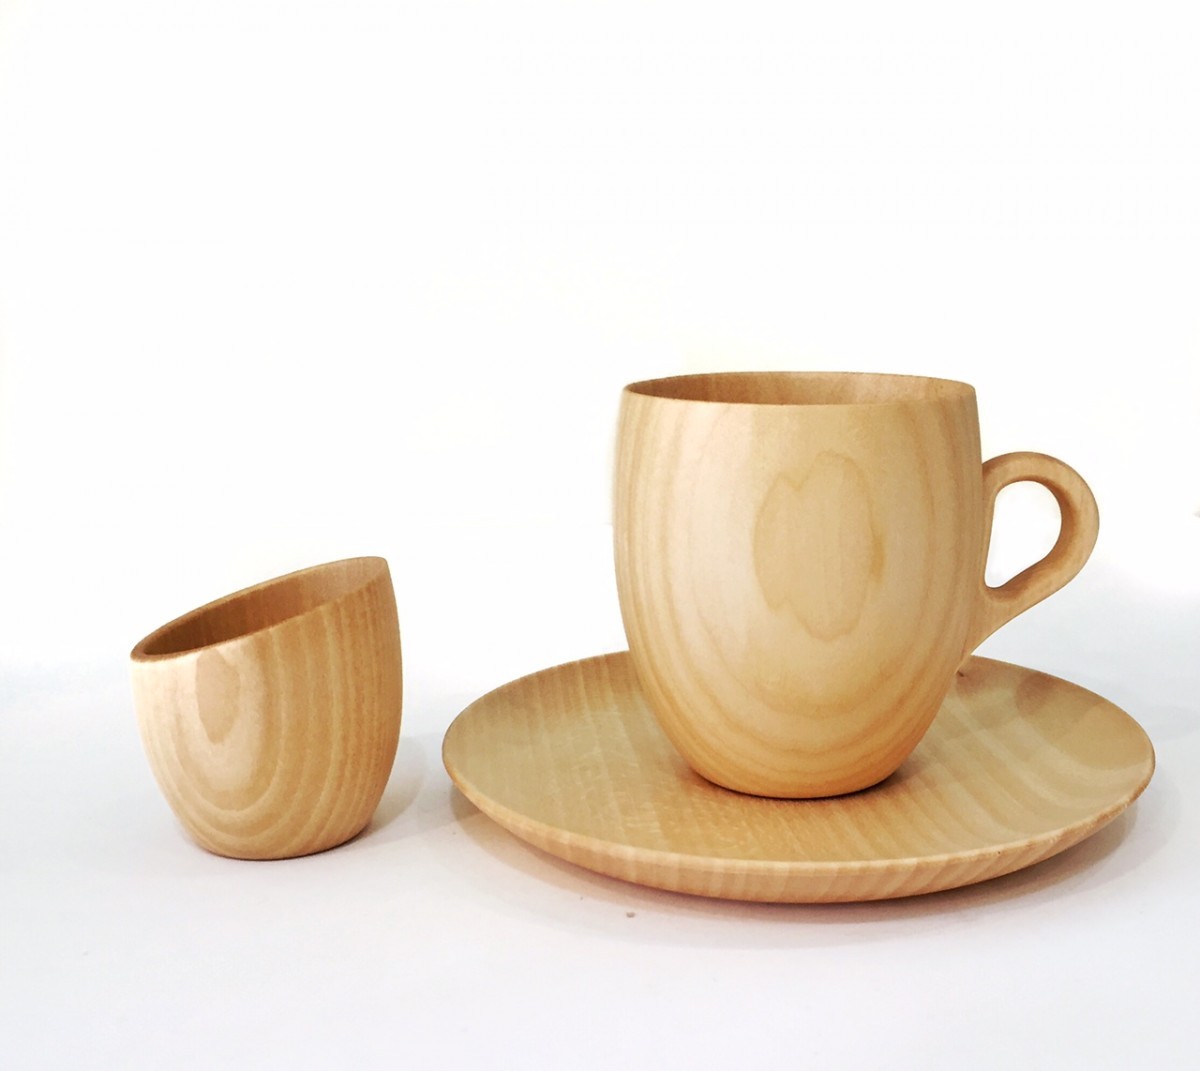  wooden. milk pitcher made in Japan wooden glass Cara milk server height . industrial arts 